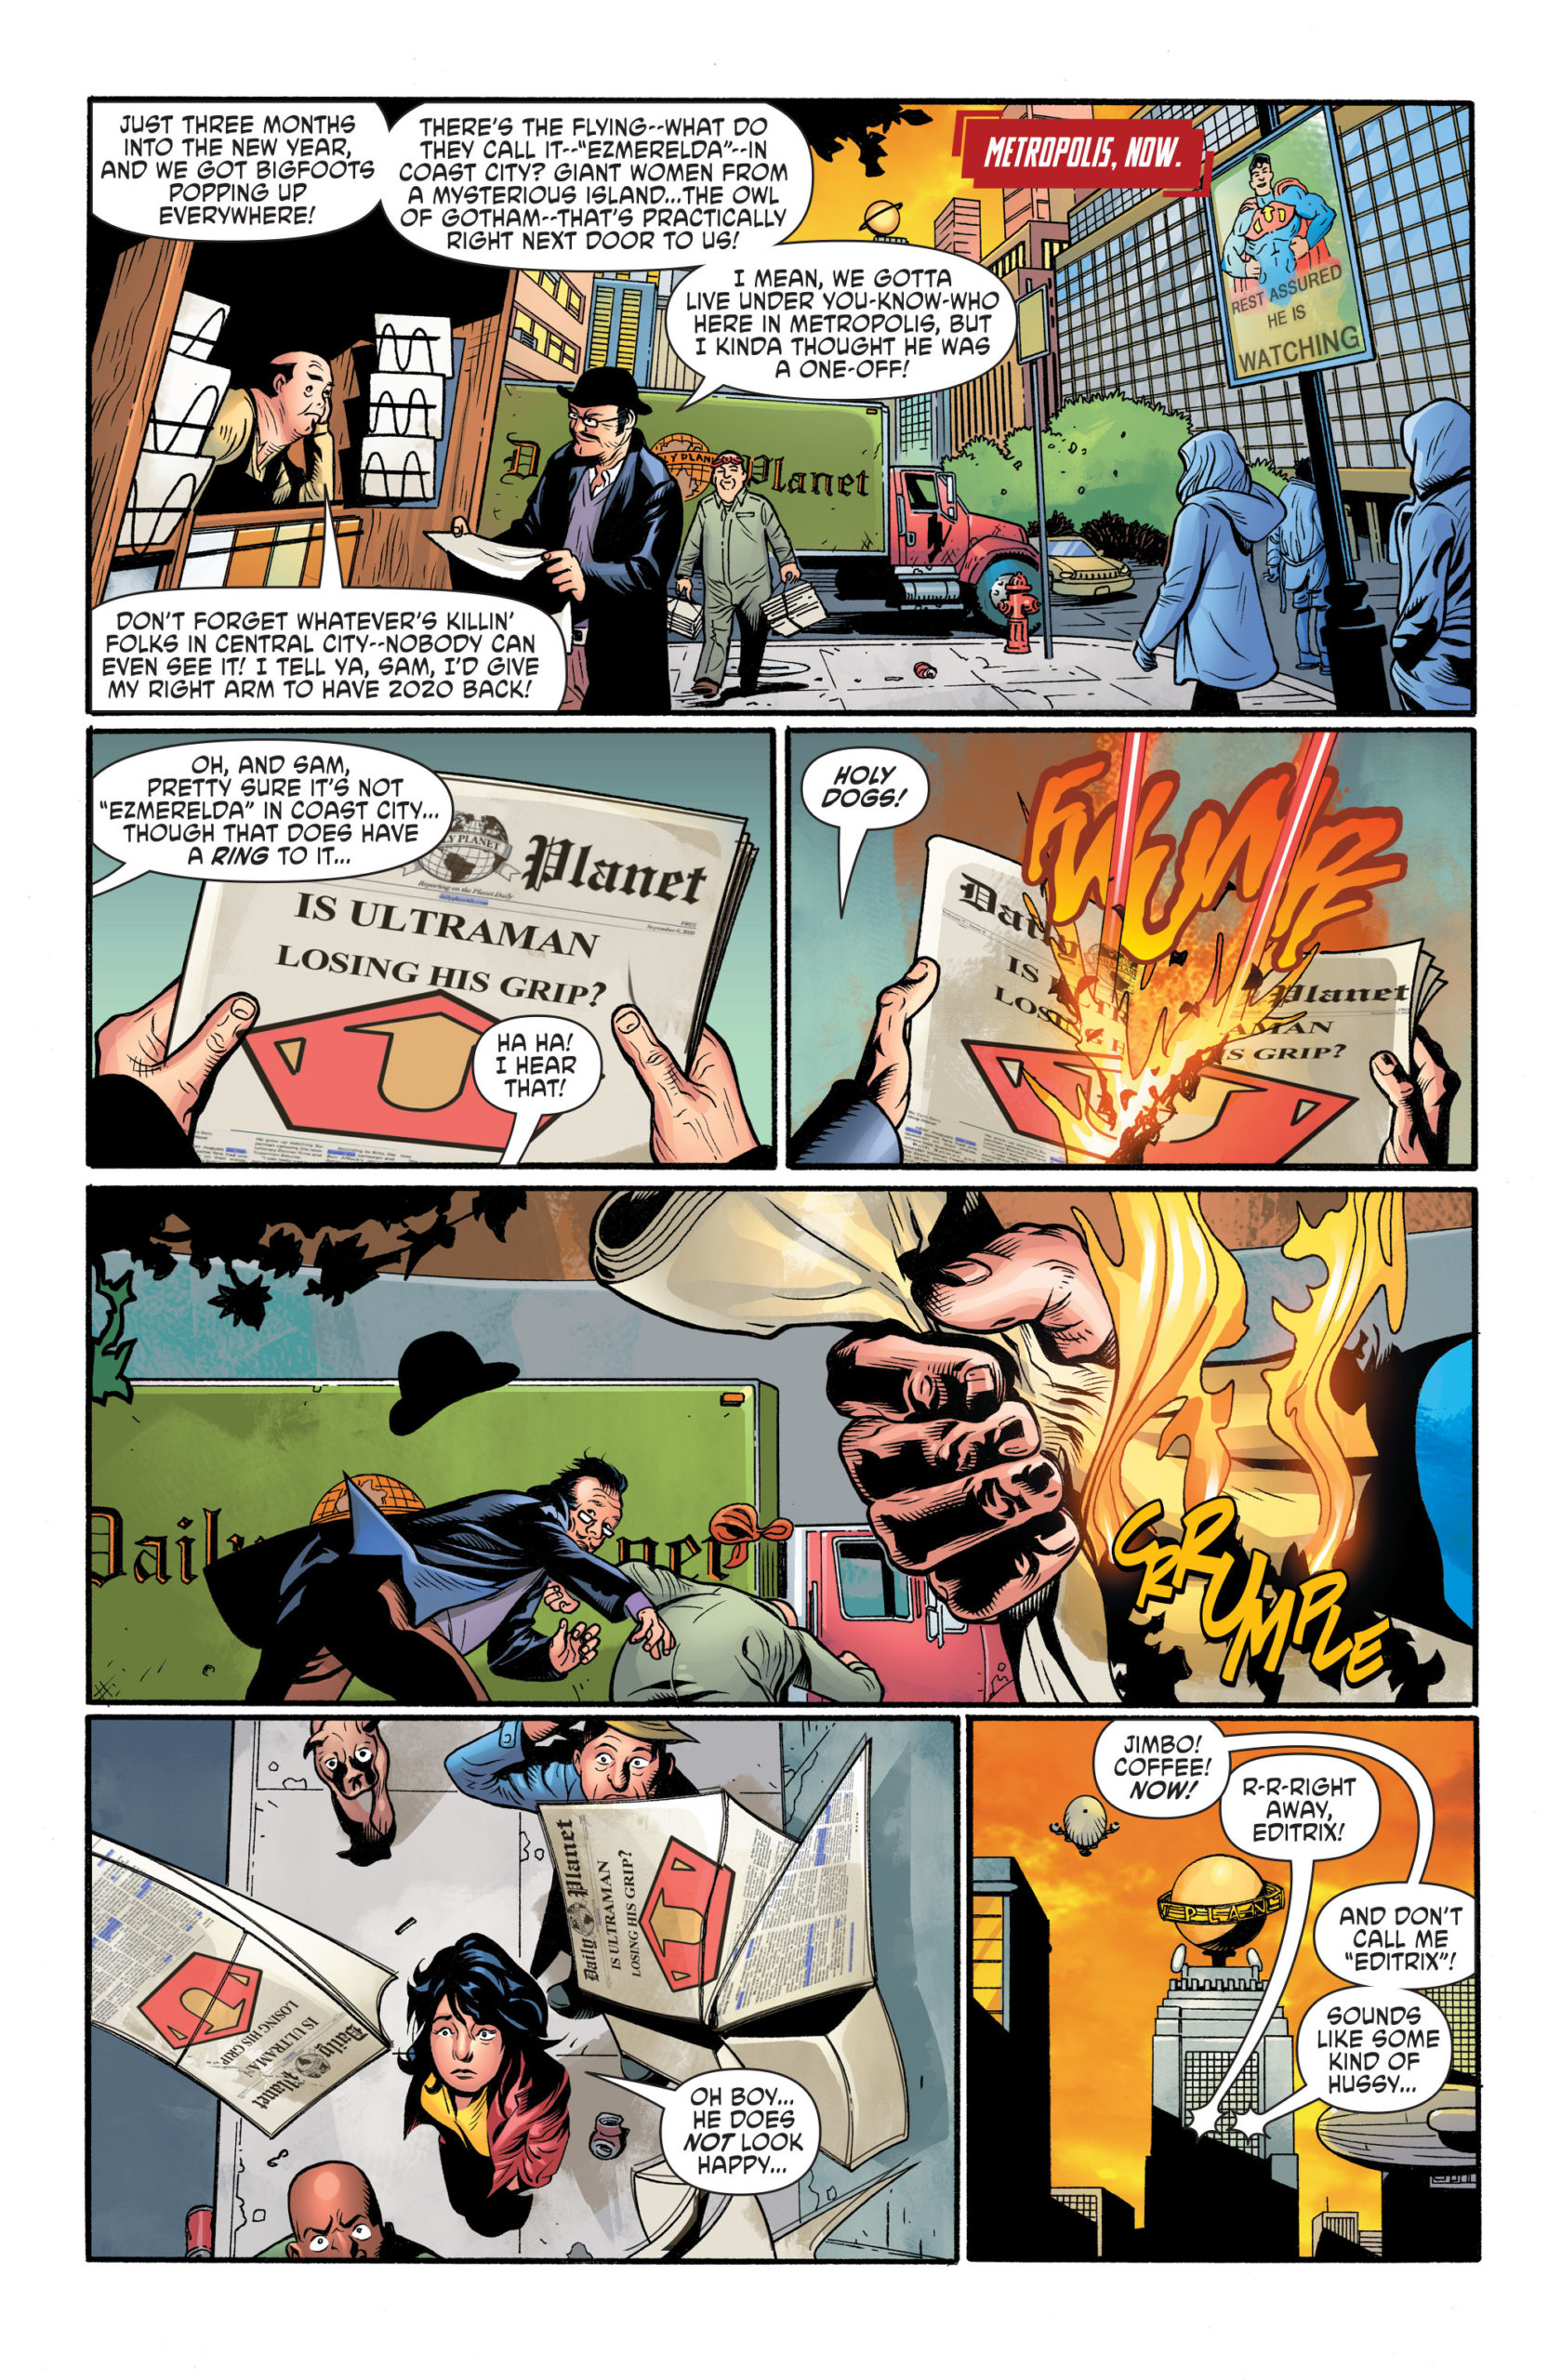 Crime Syndicate #1 DC Comics News